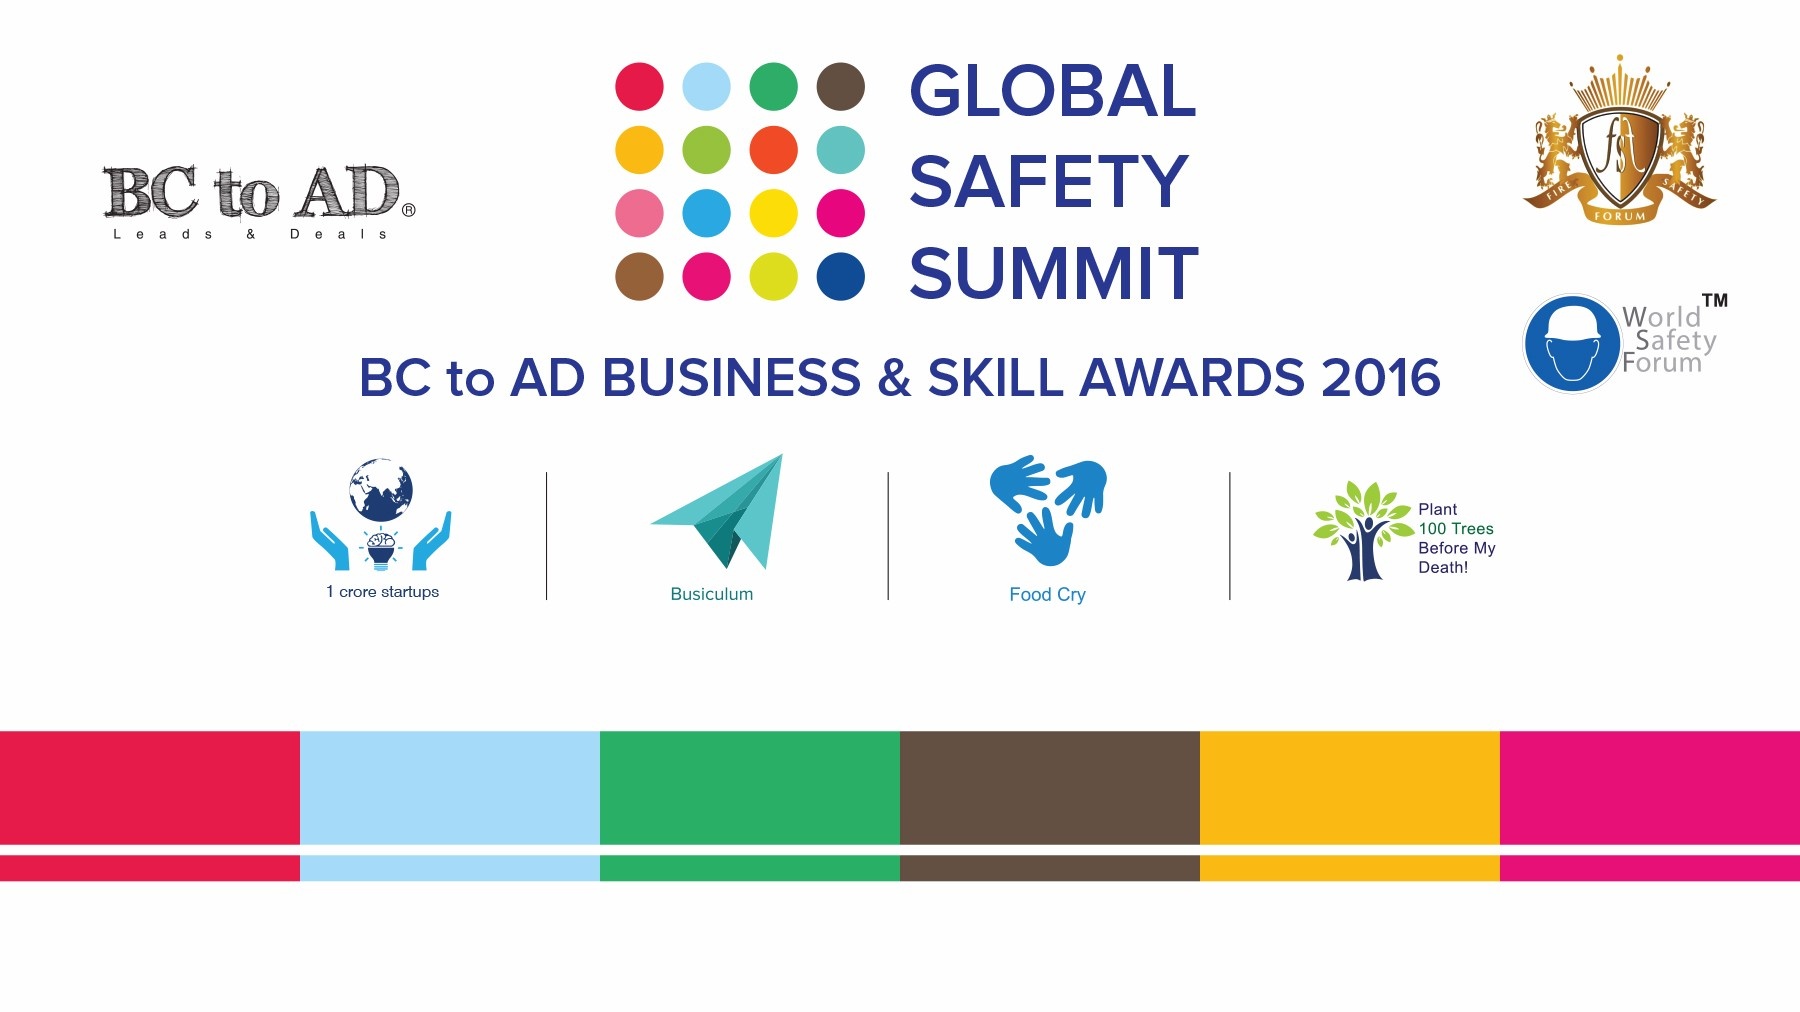 Global Safety Summit SponsorMyEvent